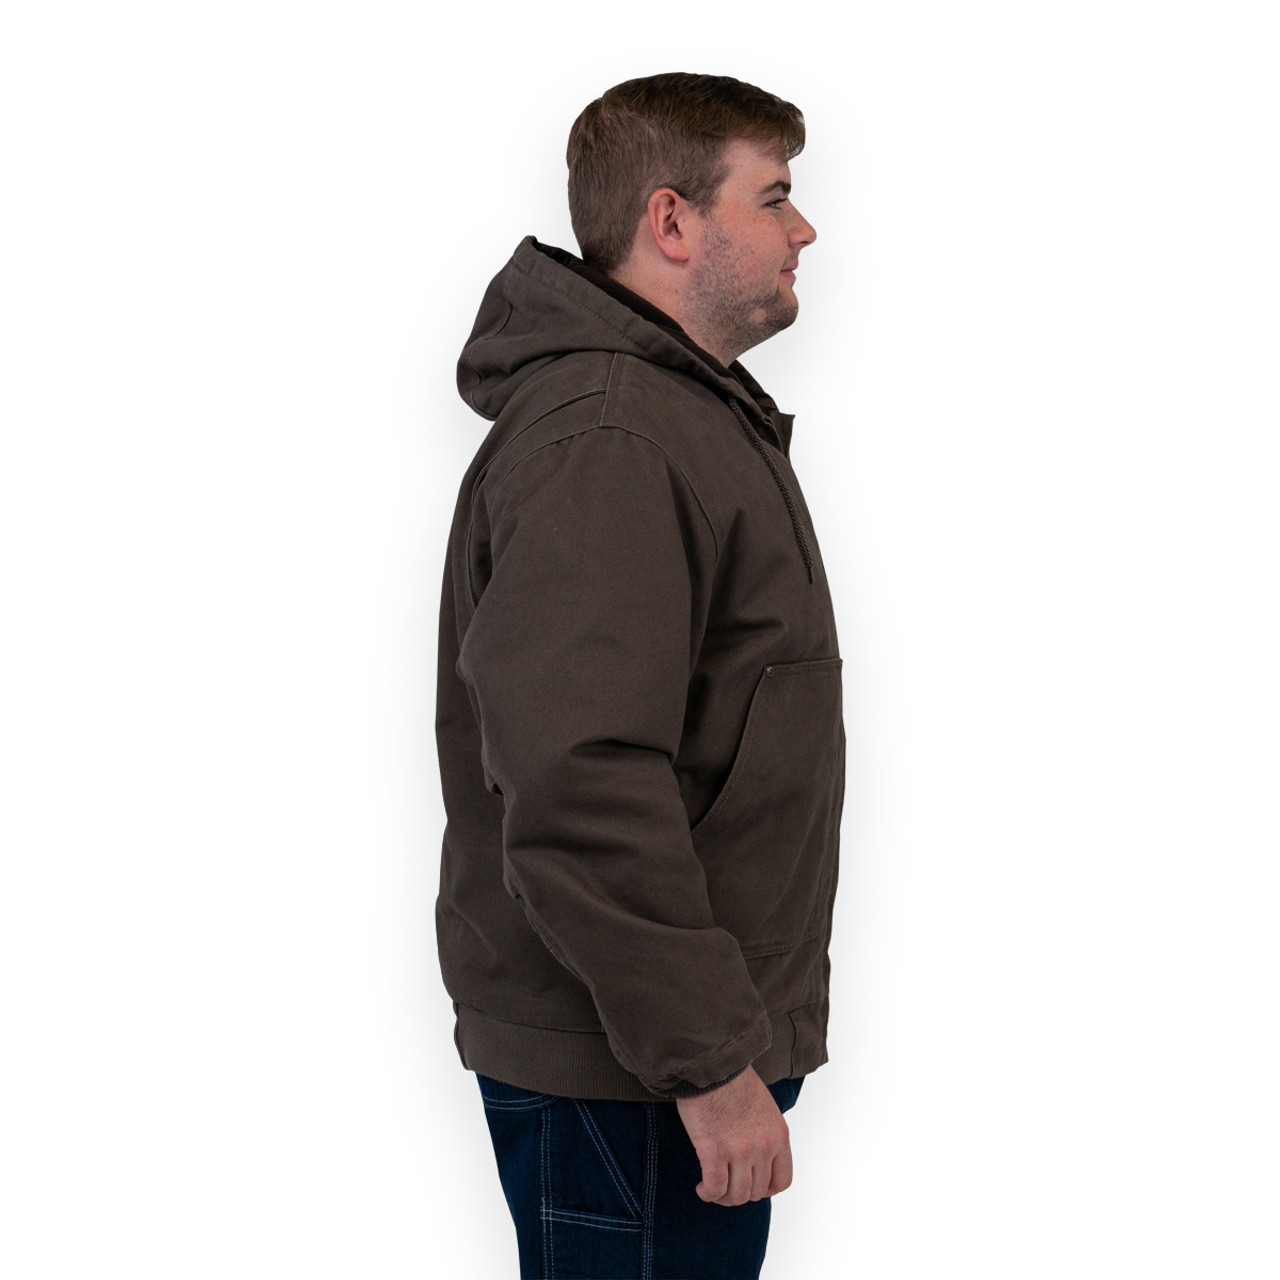 Premium Insulated Fleece Lined Jacket